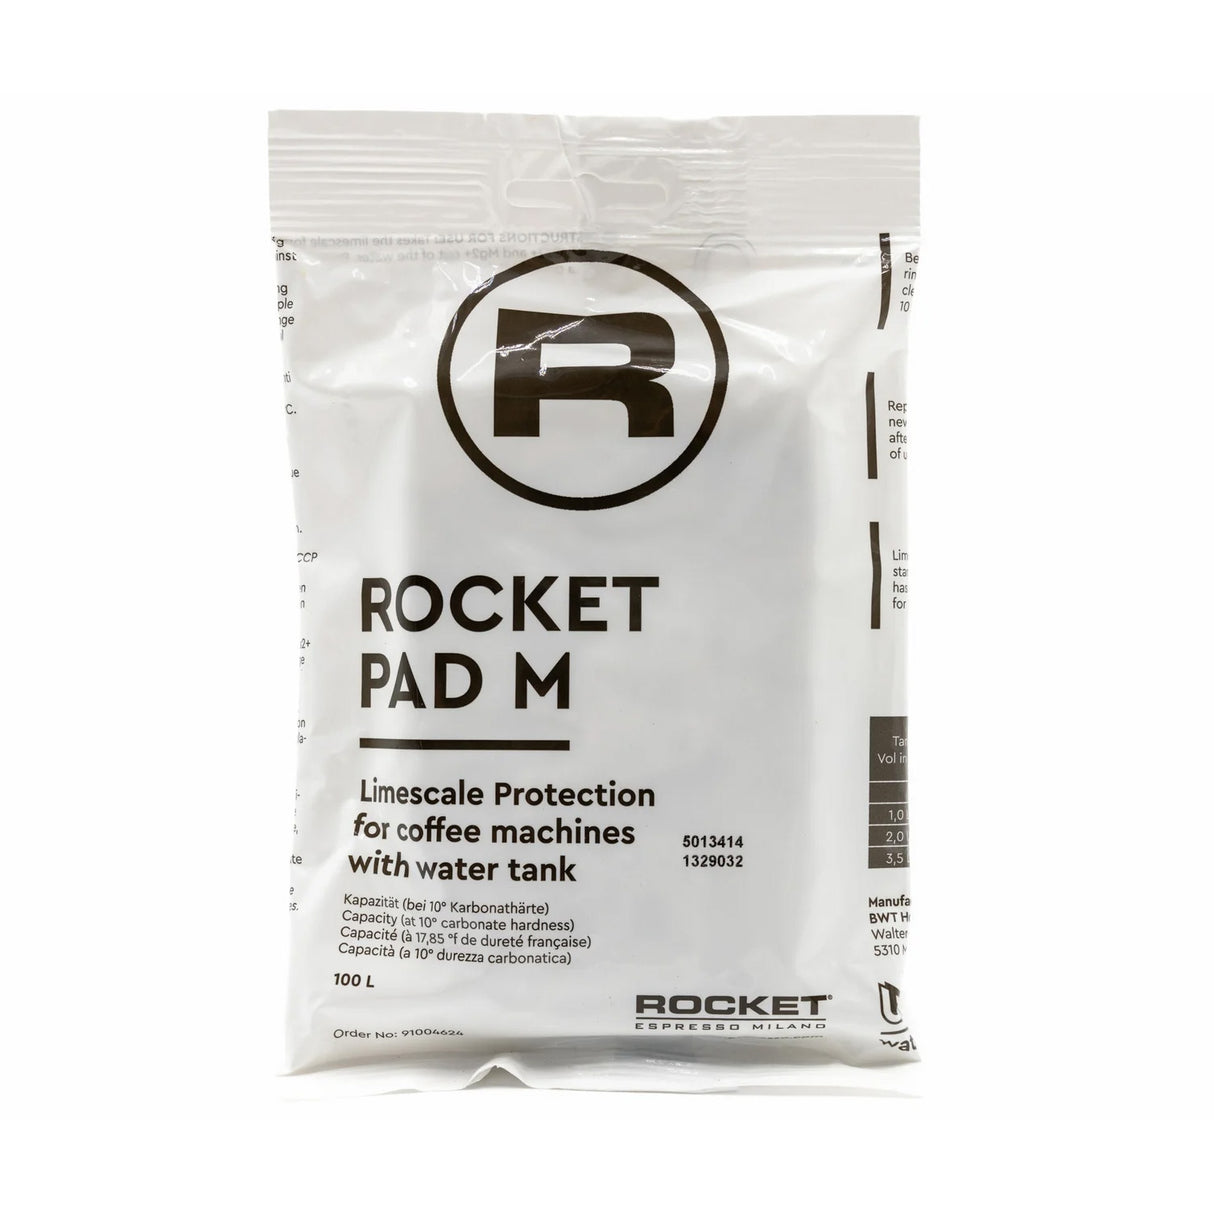 Rocket water softener